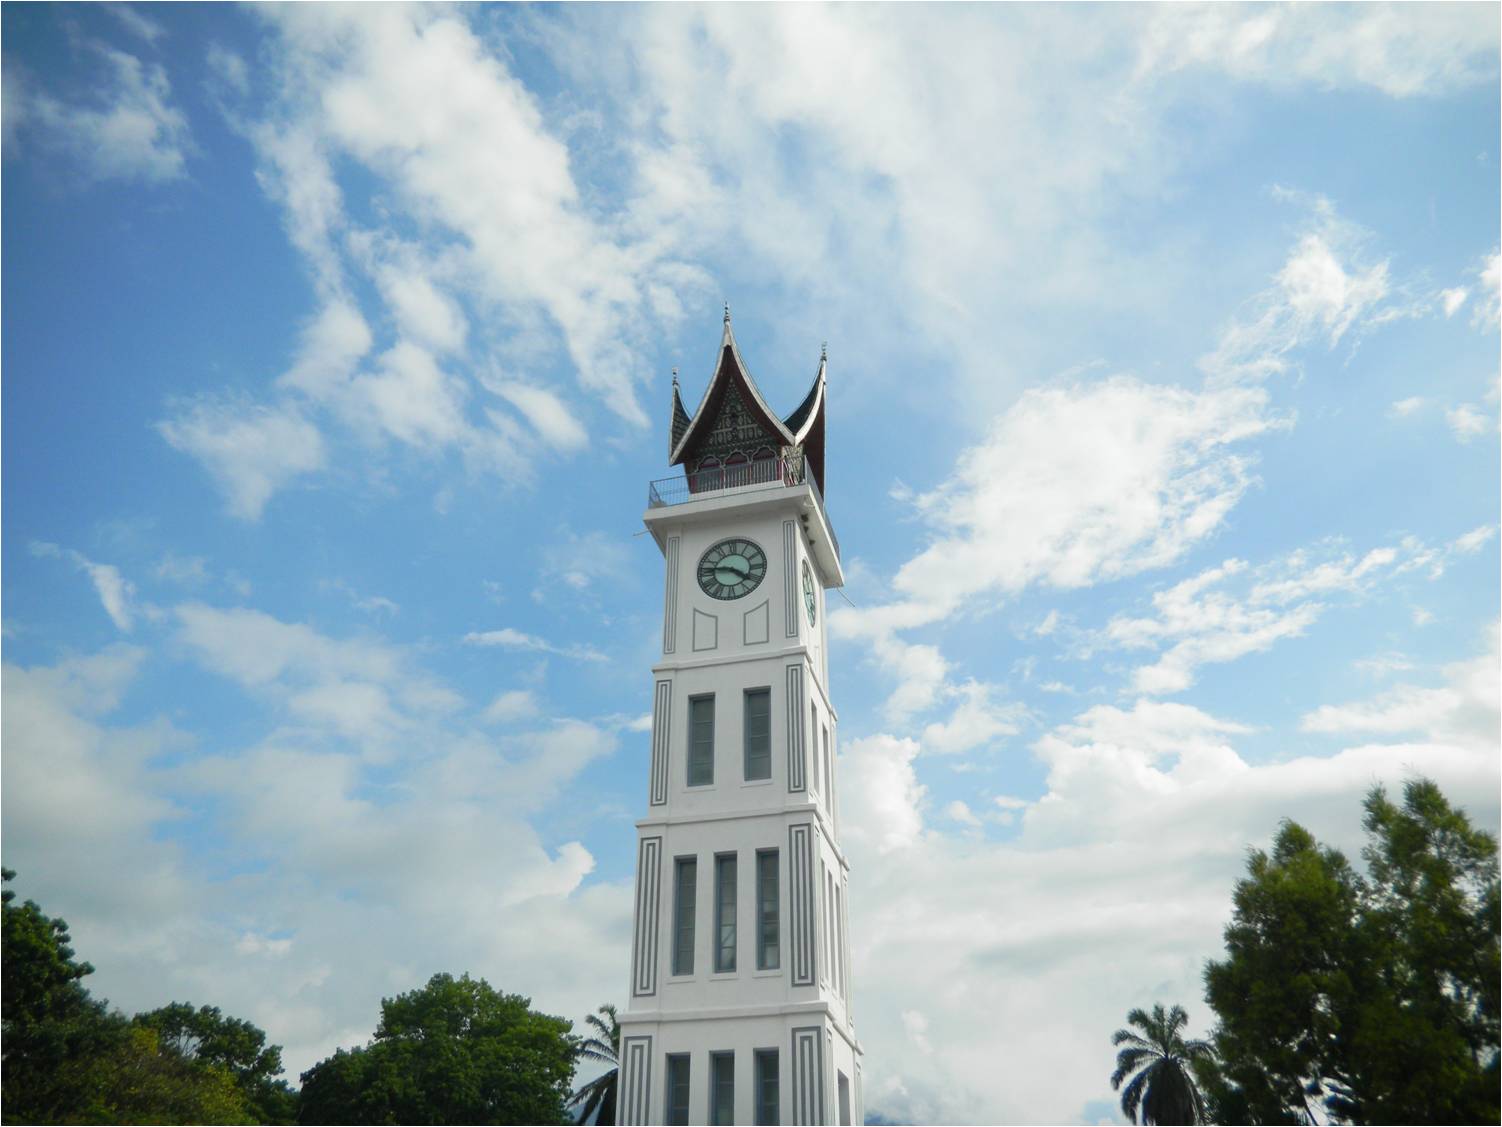 Download this Rumah Gadang Pdikm Padang Panjang picture